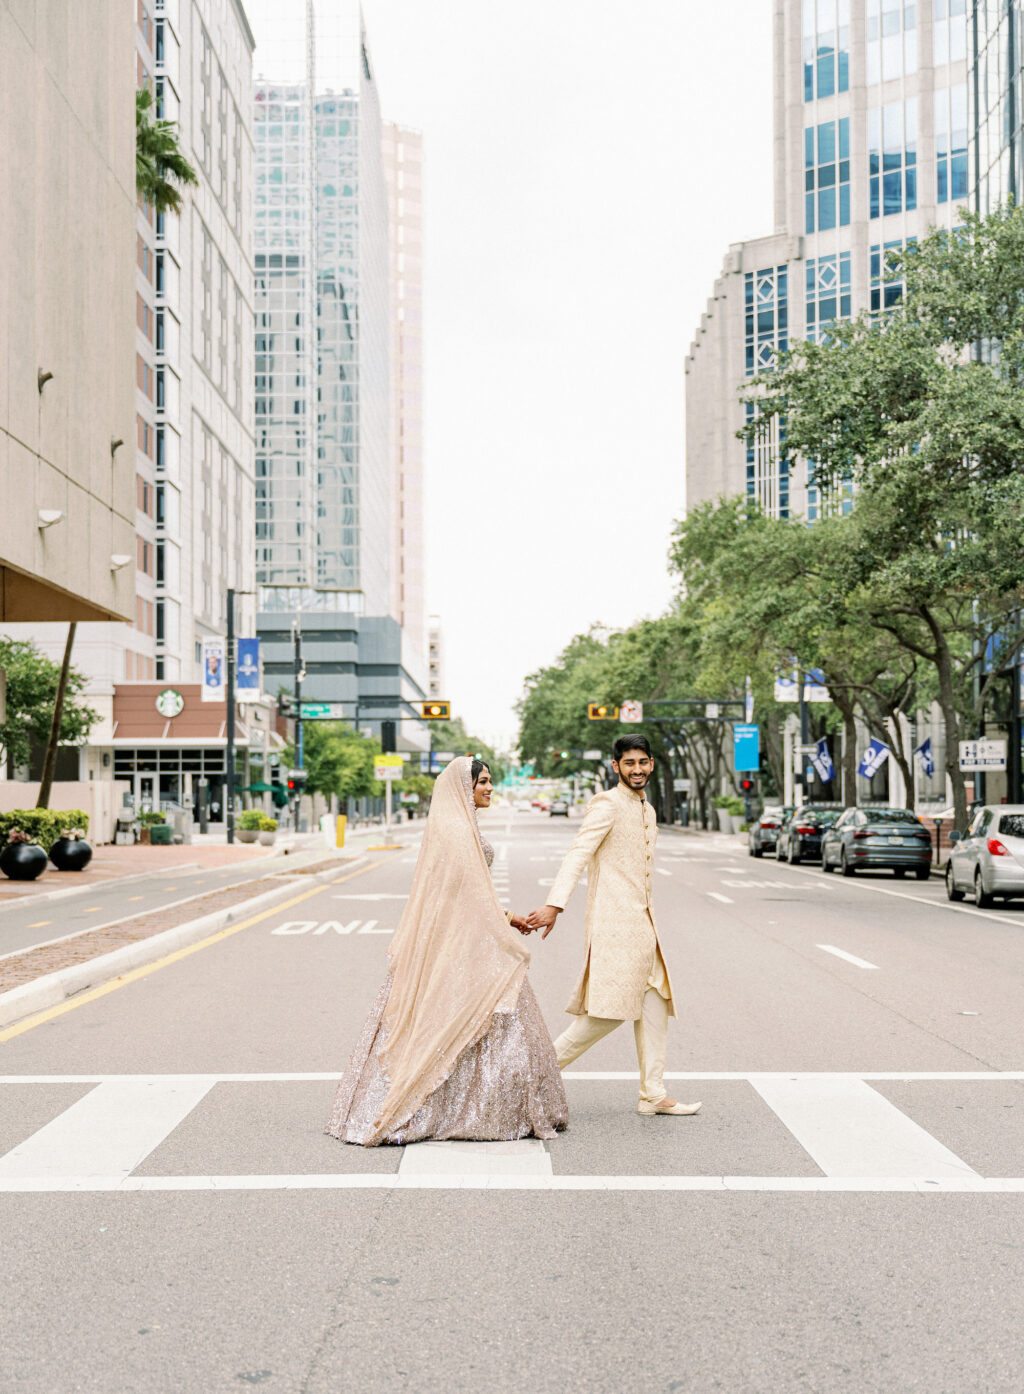 Bide and Groom Walking Across Street Wedding Portrait | Tampa Bay Videographer Shannon Kelly Films | Photographer Dewitt For Love